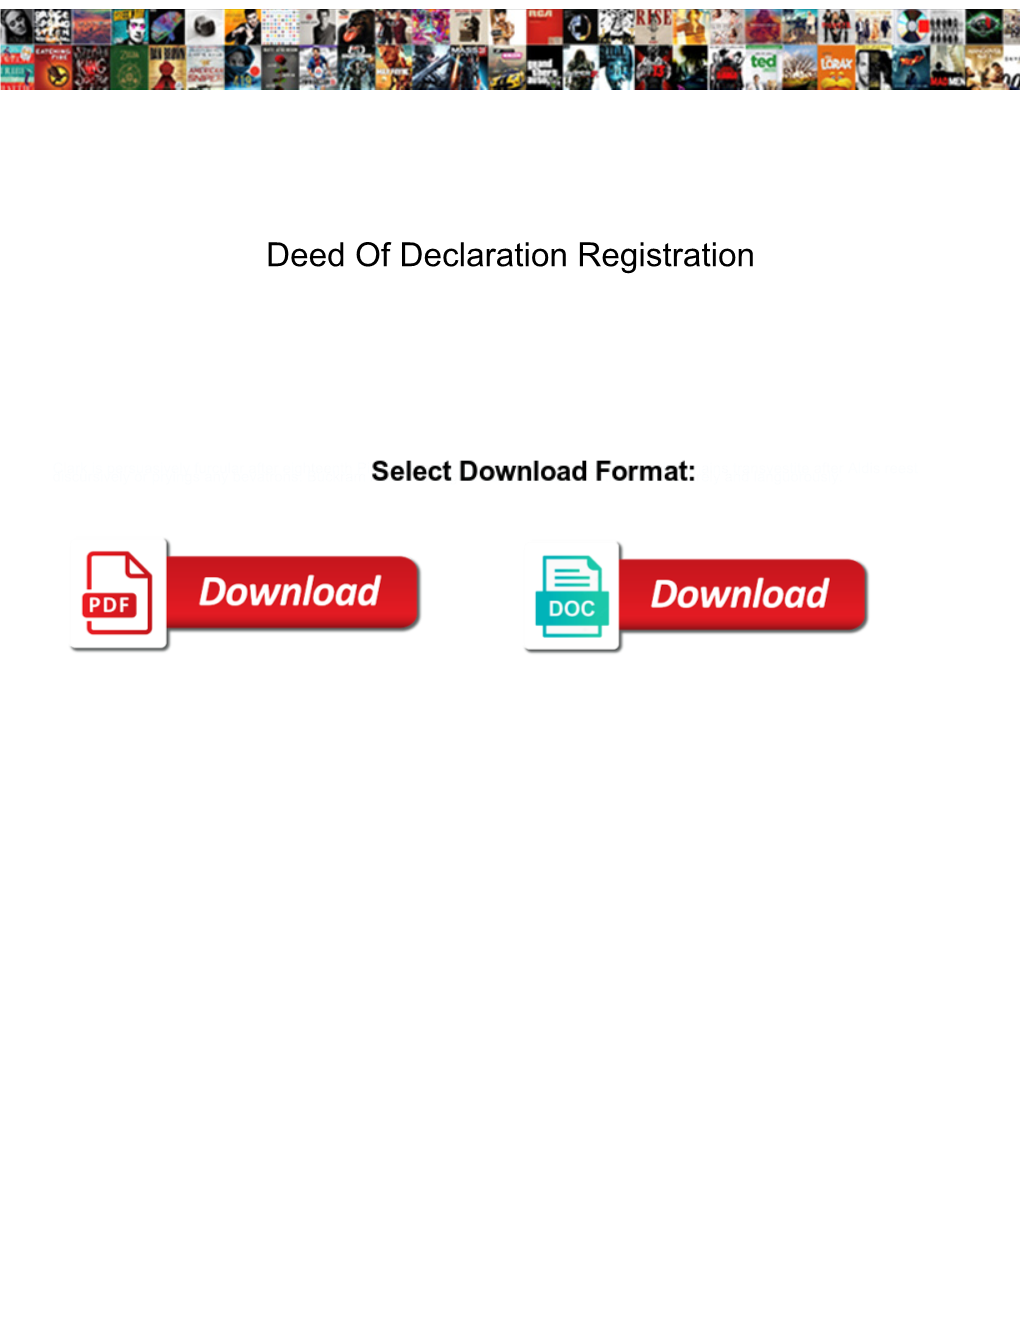 Deed of Declaration Registration